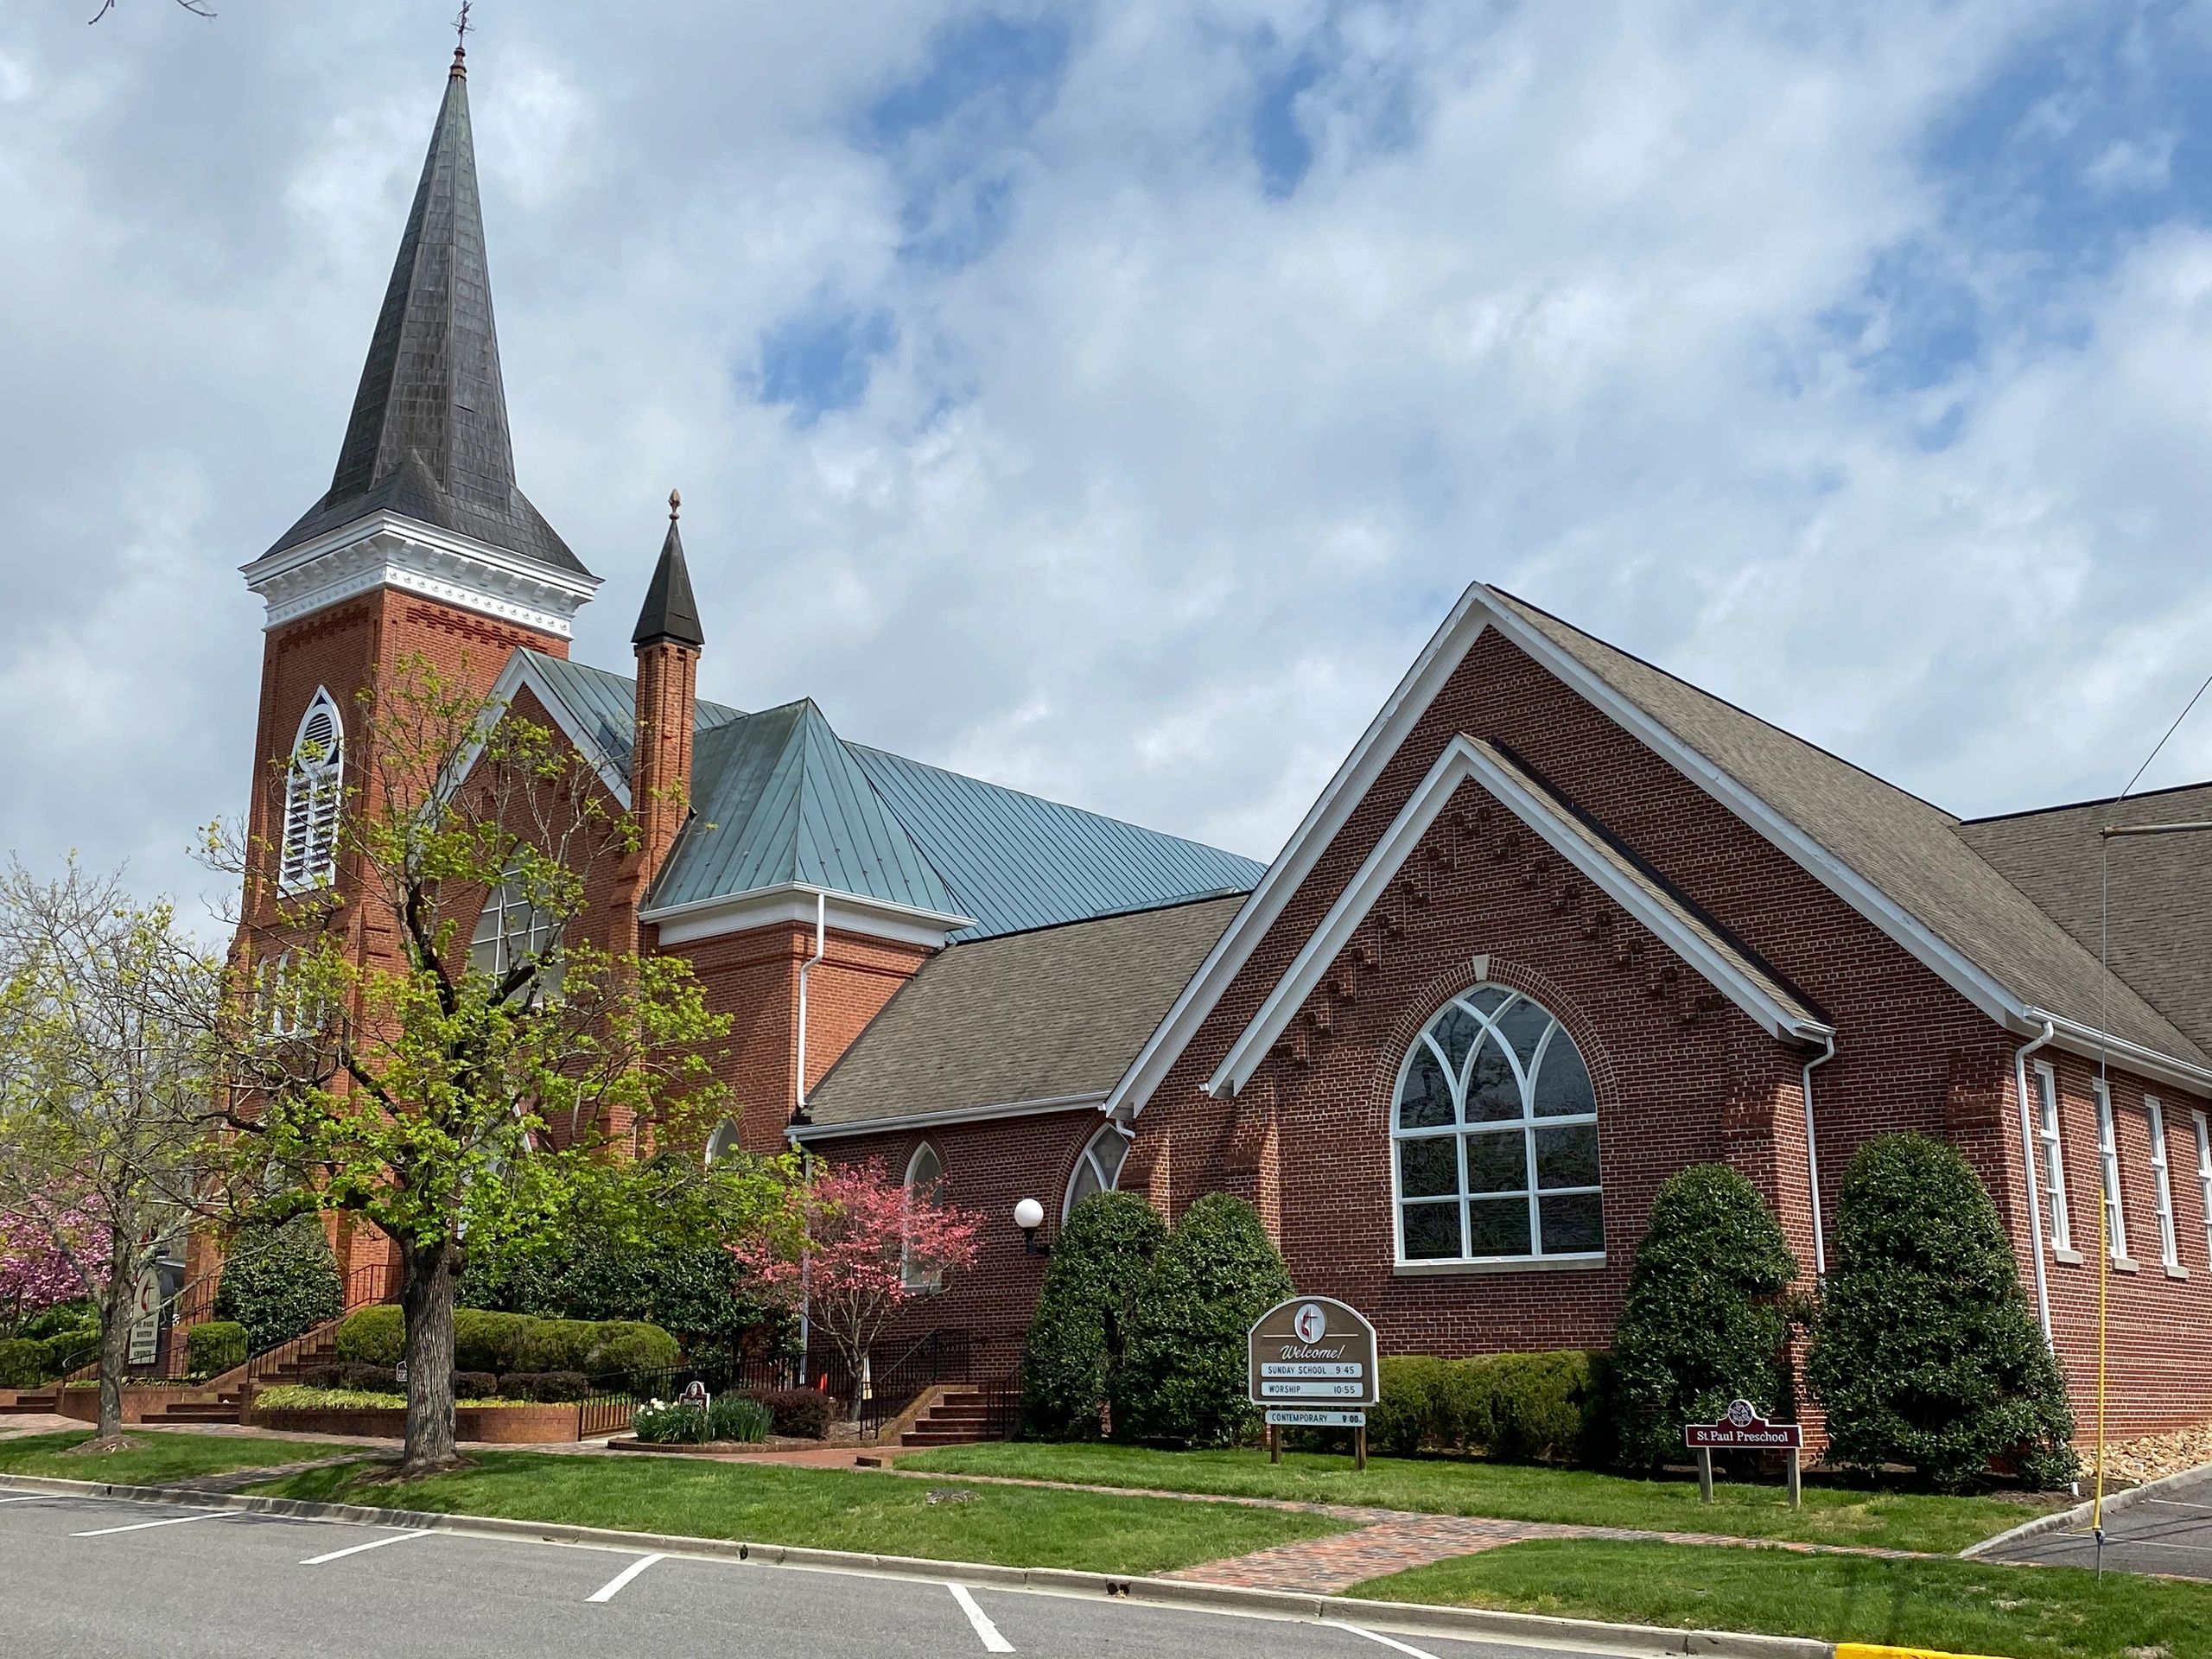 St. Paul United Methodist Church in Wytheville, Virginia